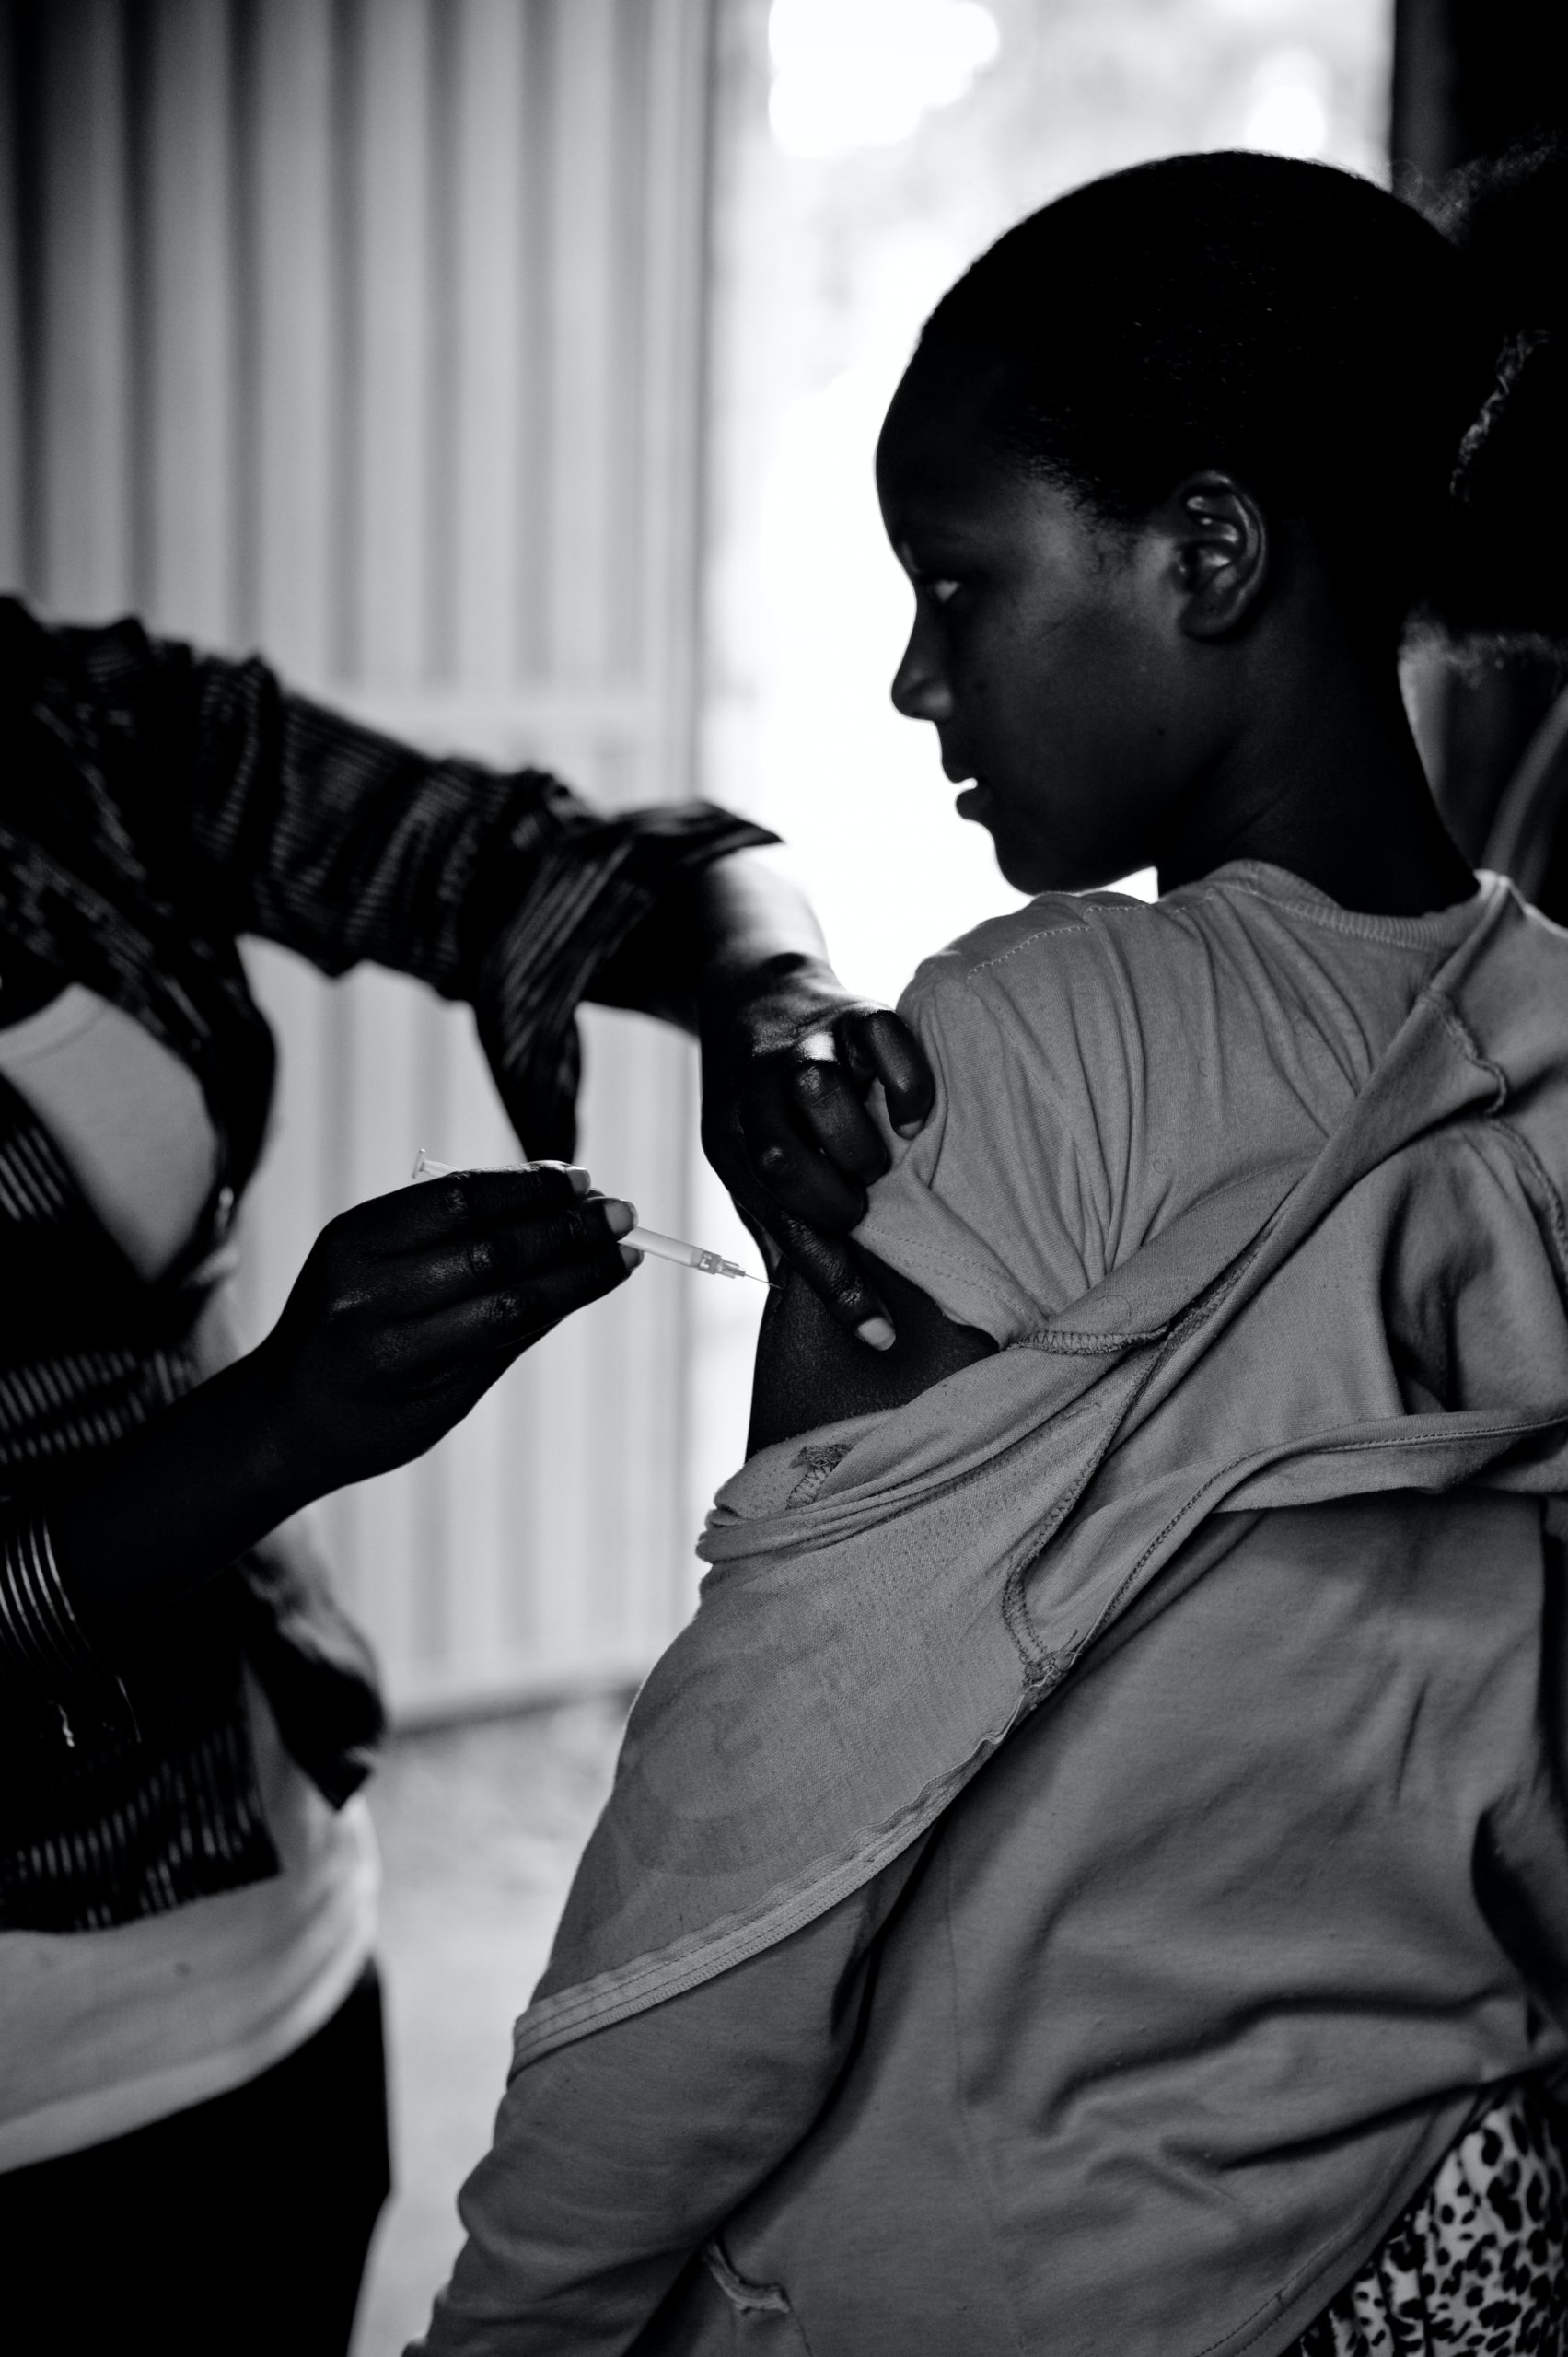 African girl gets vaccine, Ethiopia